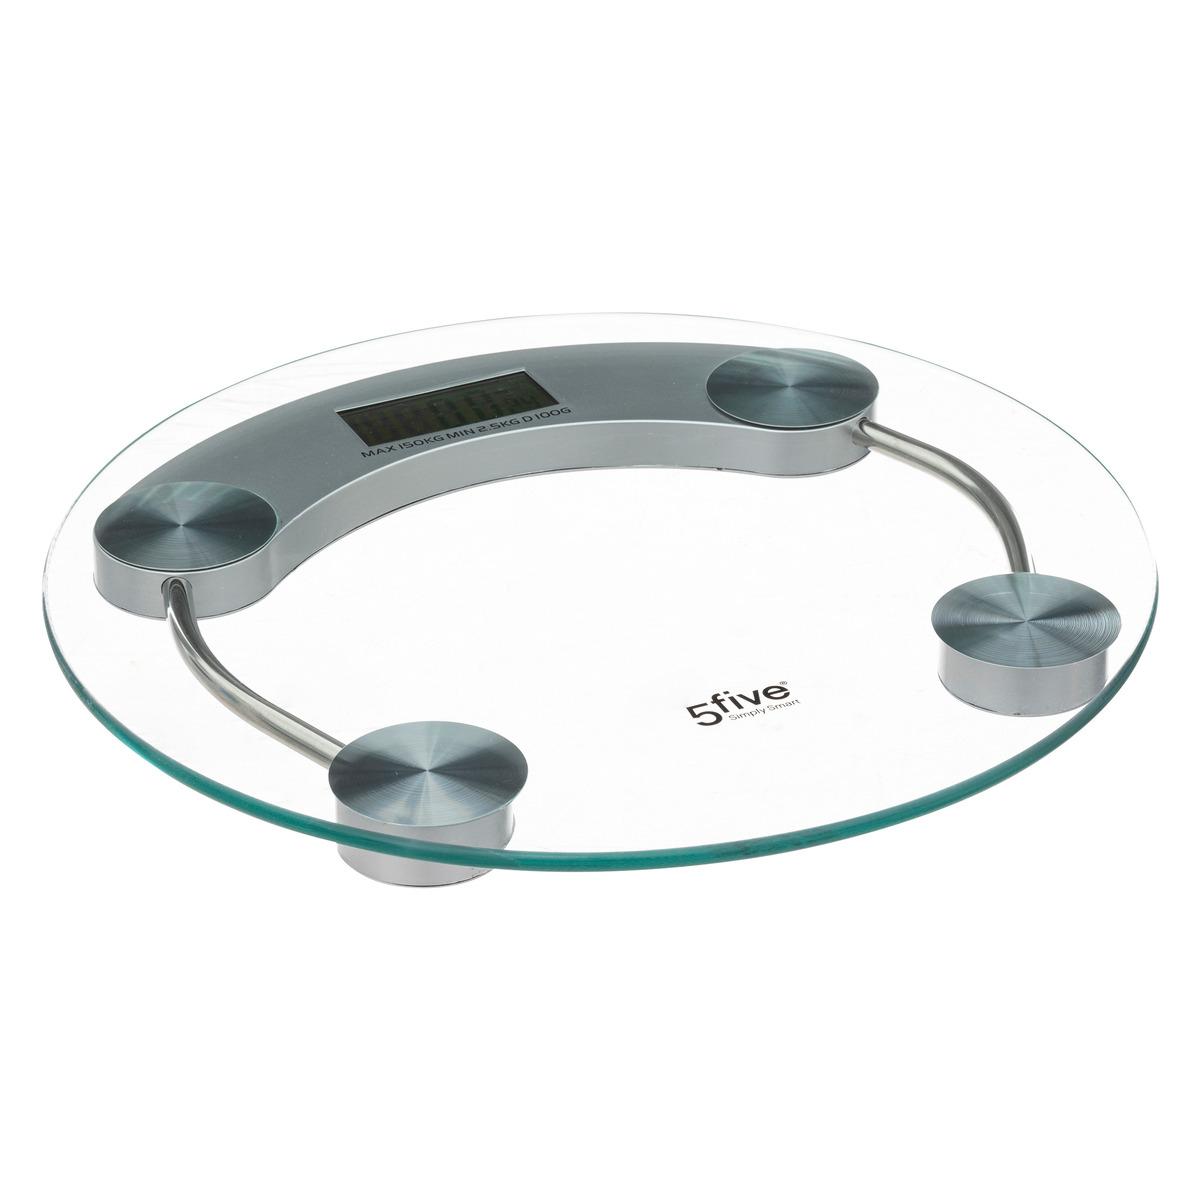 Salon Smart Digital Round Glass Scale